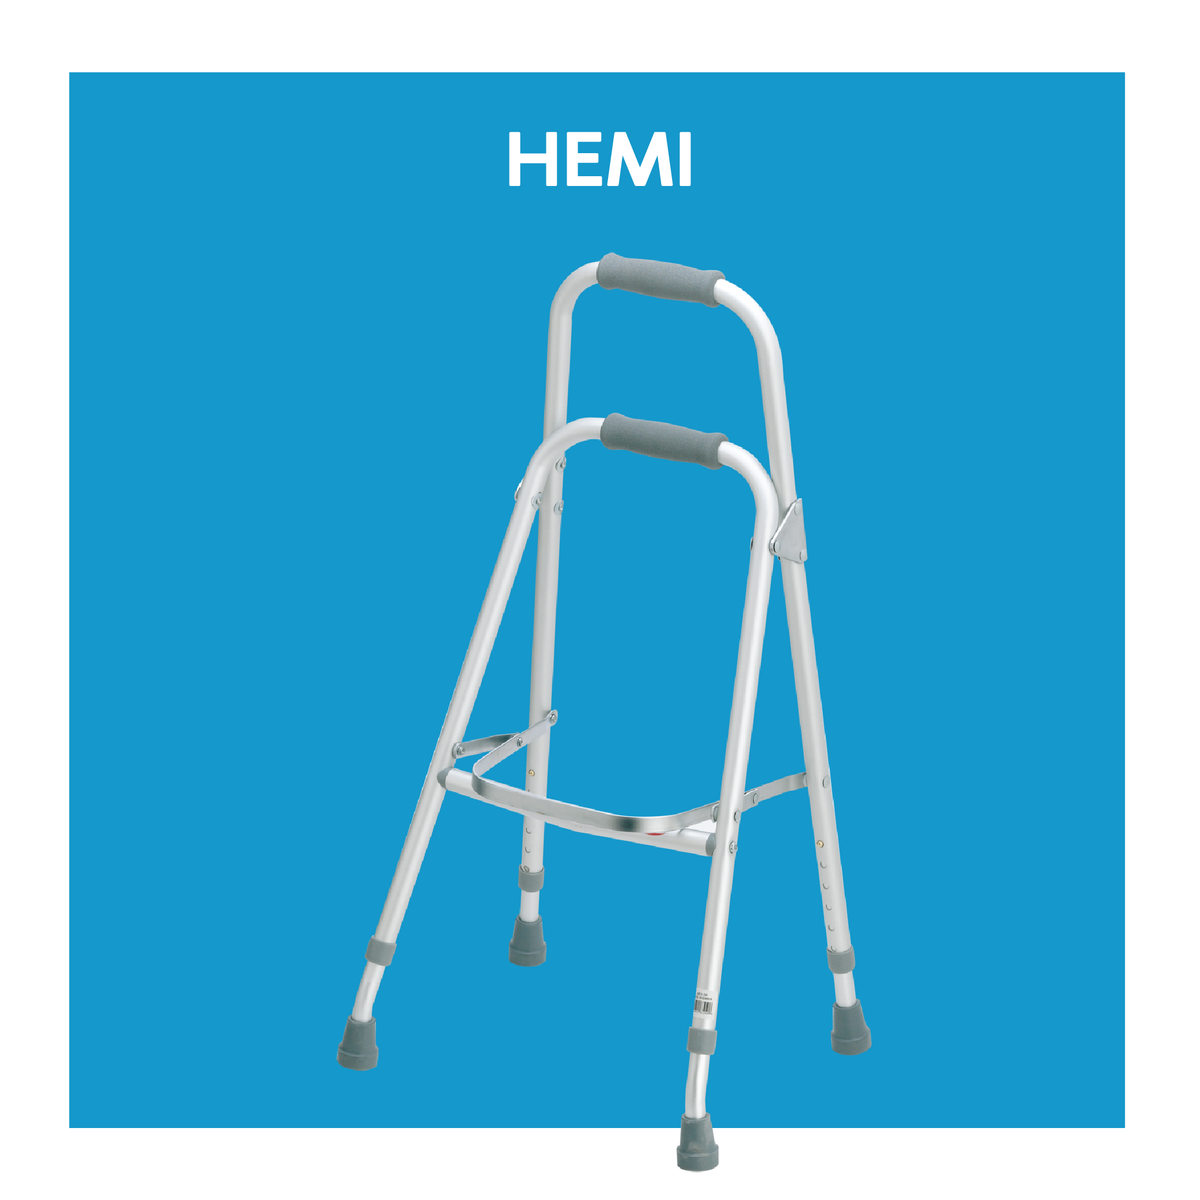 A hemi walker with text, “hemi”